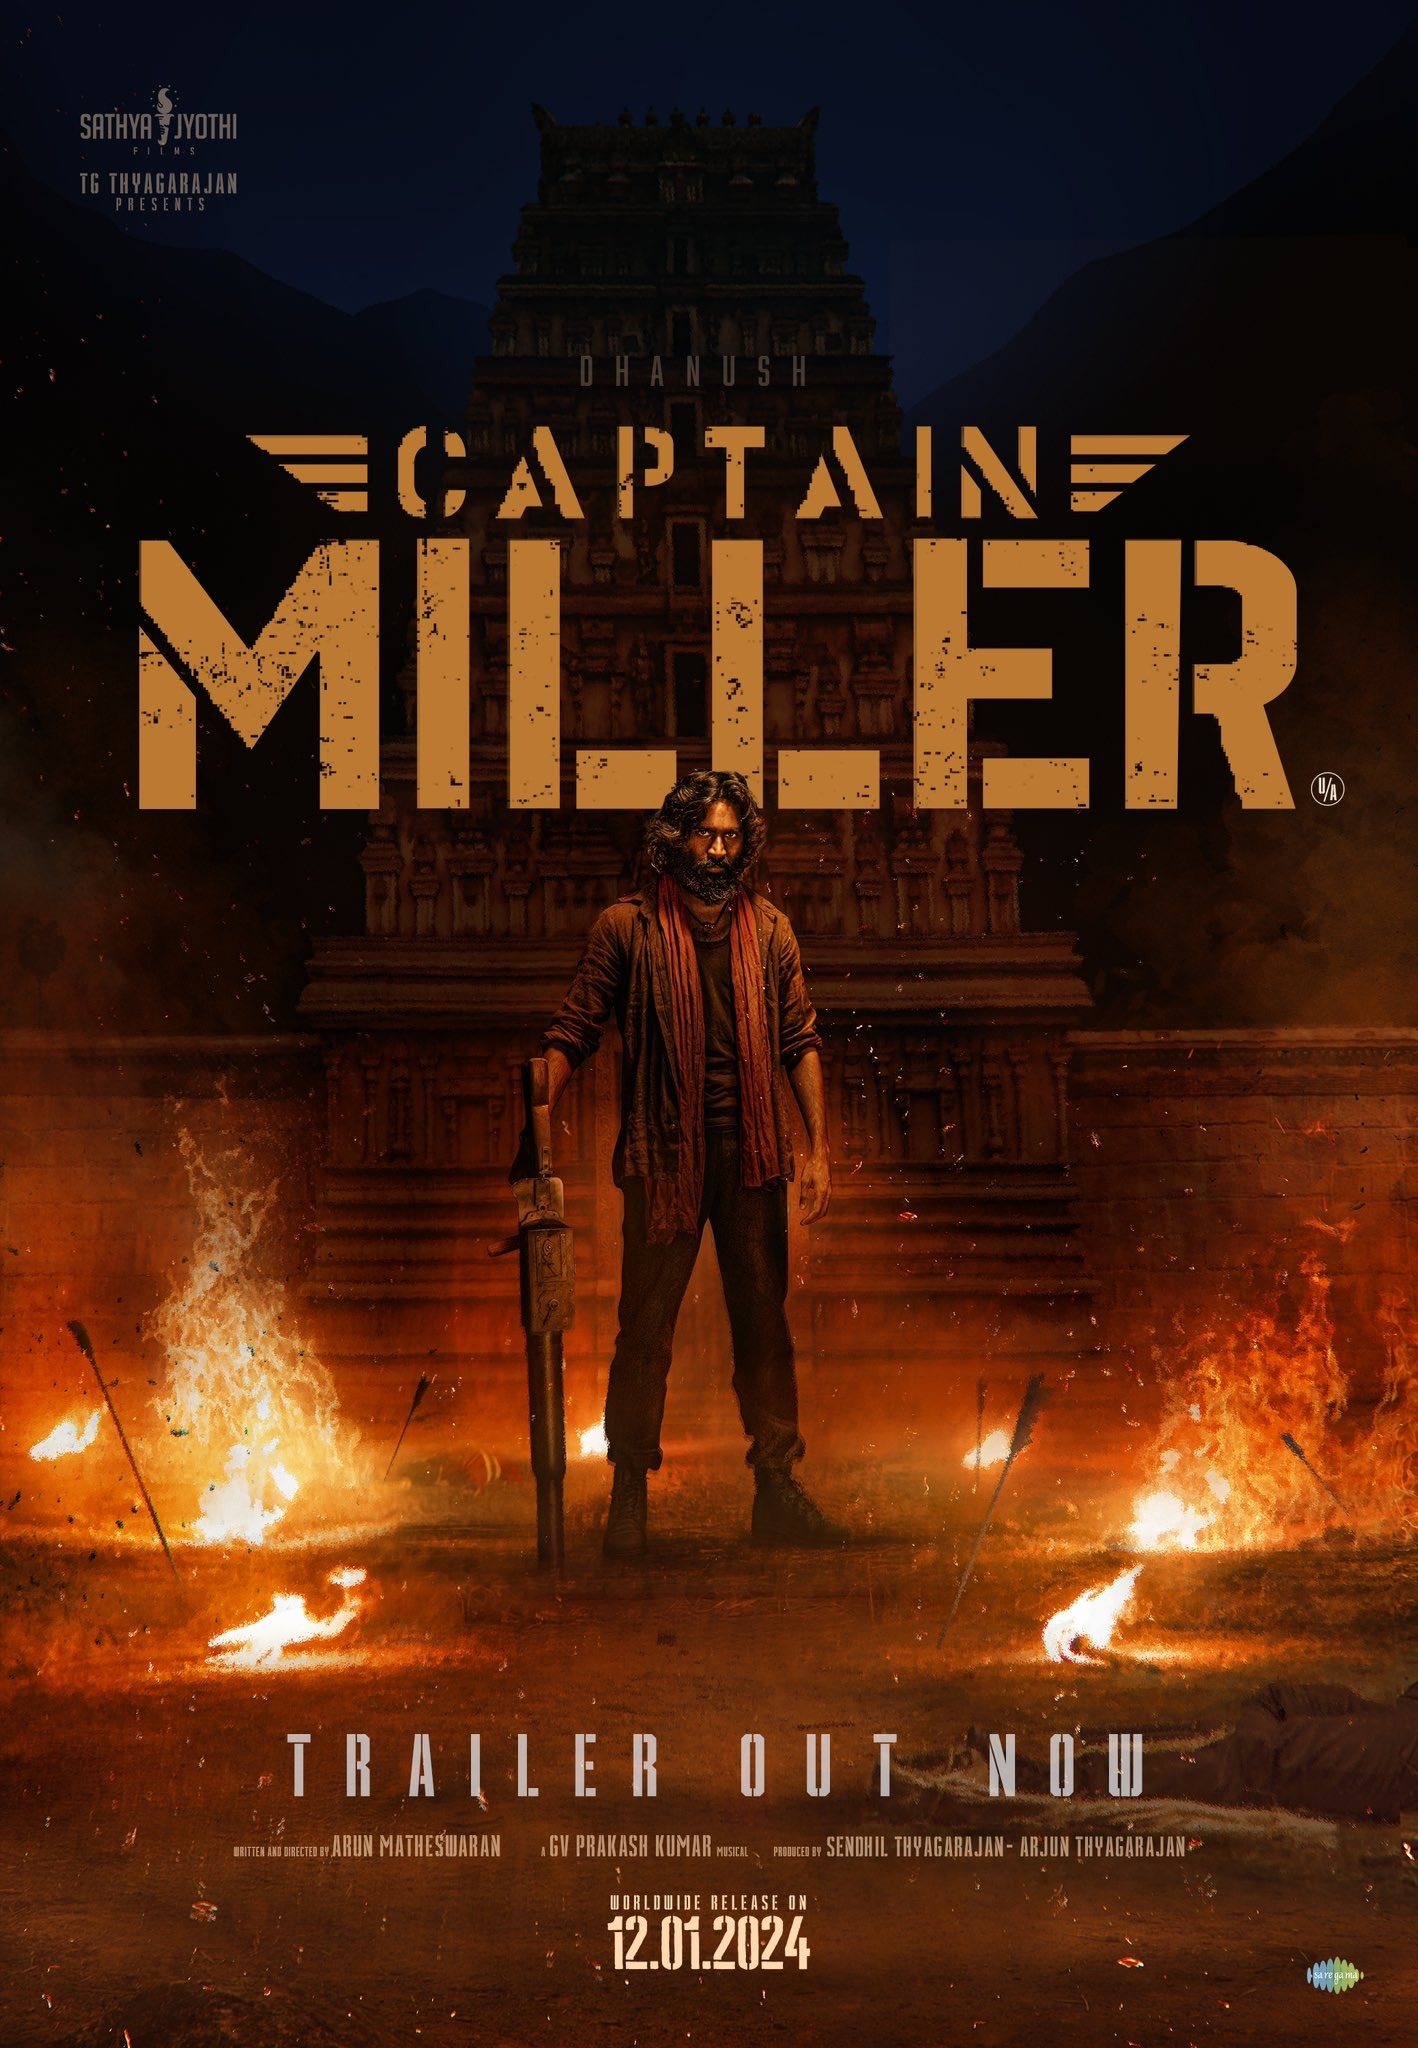 Mega Sized Movie Poster Image for Captain Miller (#4 of 6)